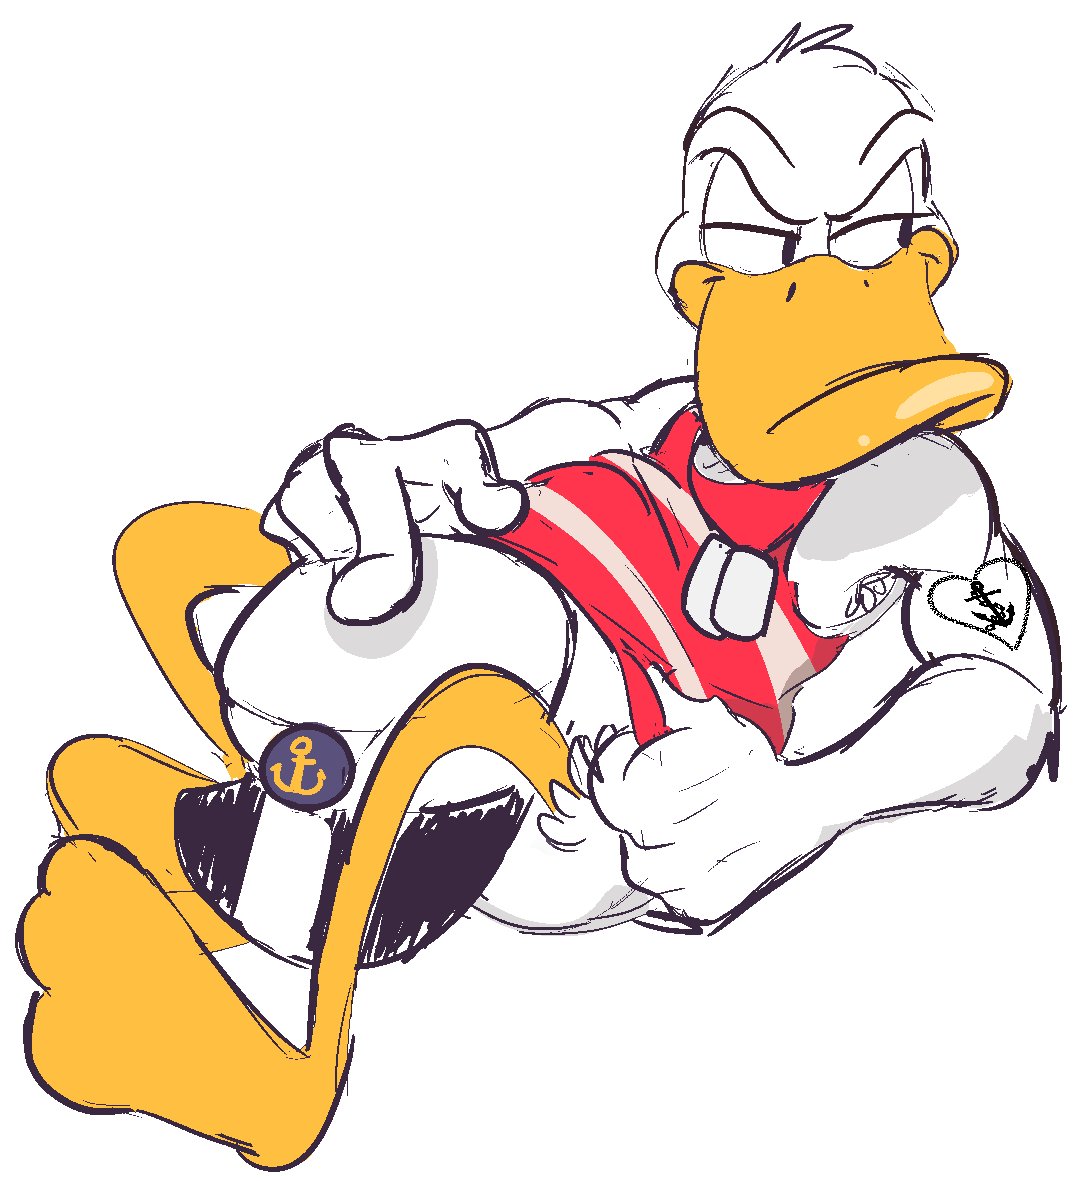 Fuck Donald Duck.